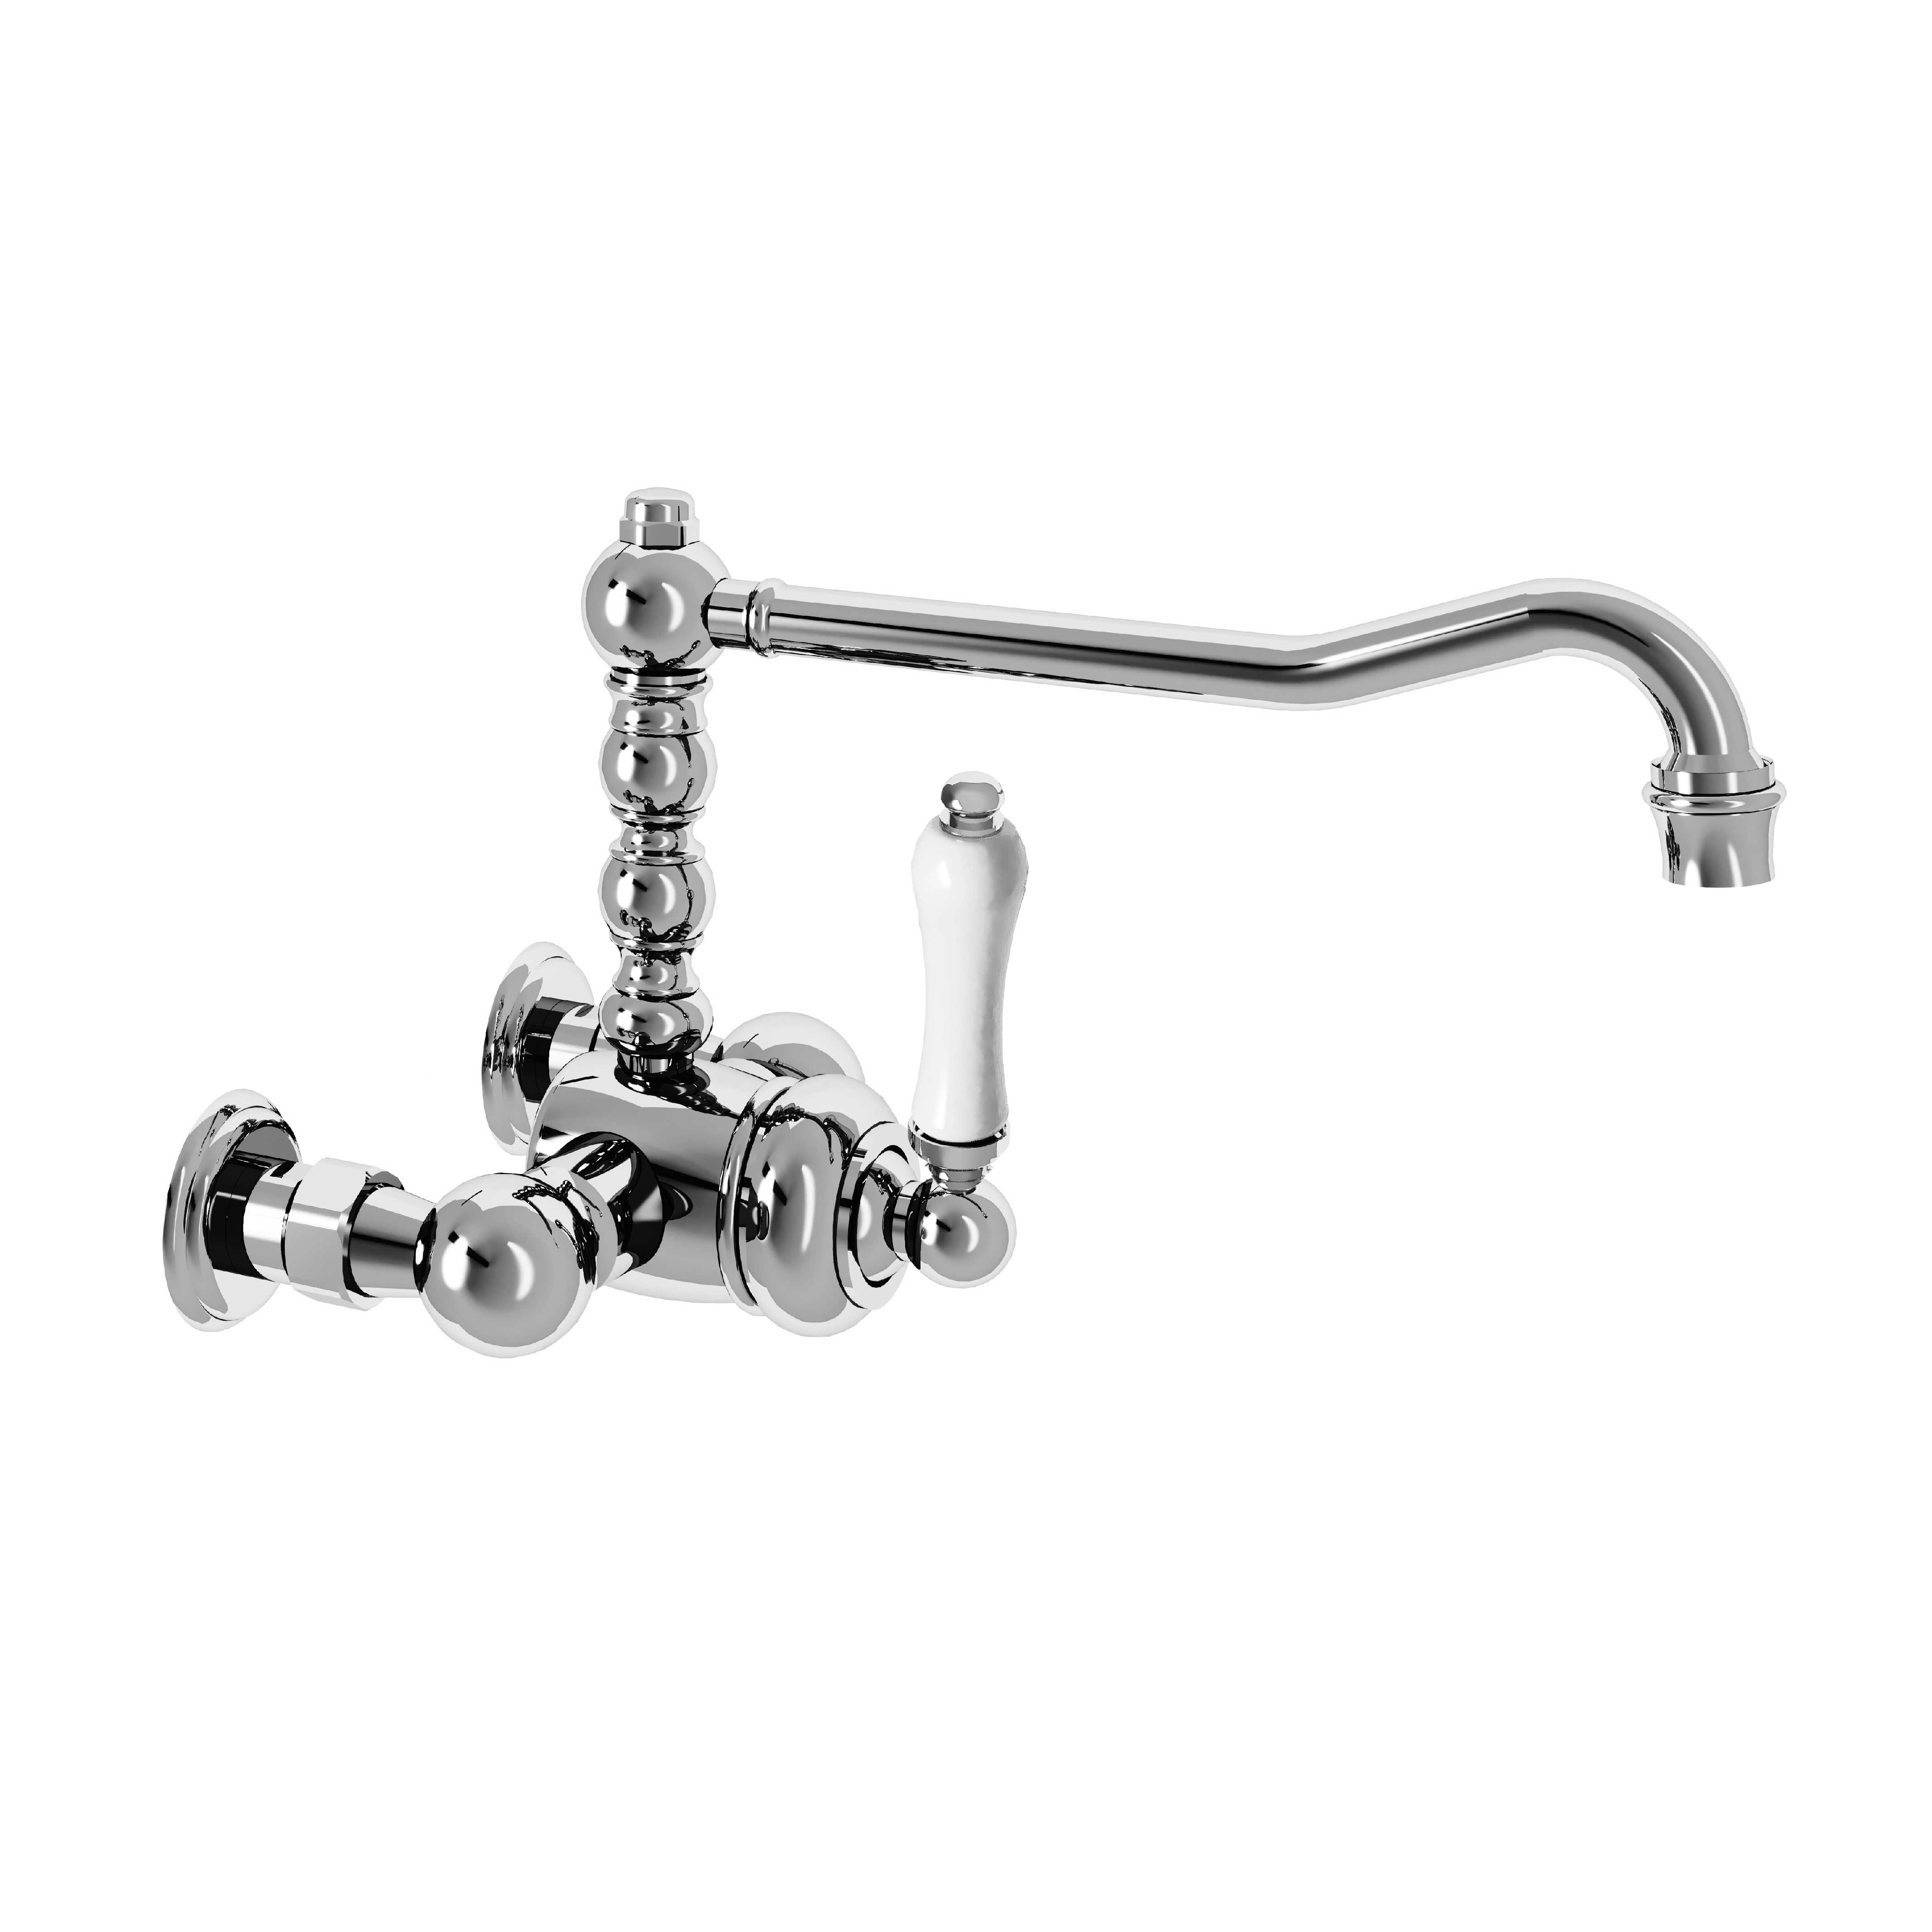 M04-1202ML Wall mounted single lever basin mixer, long spout